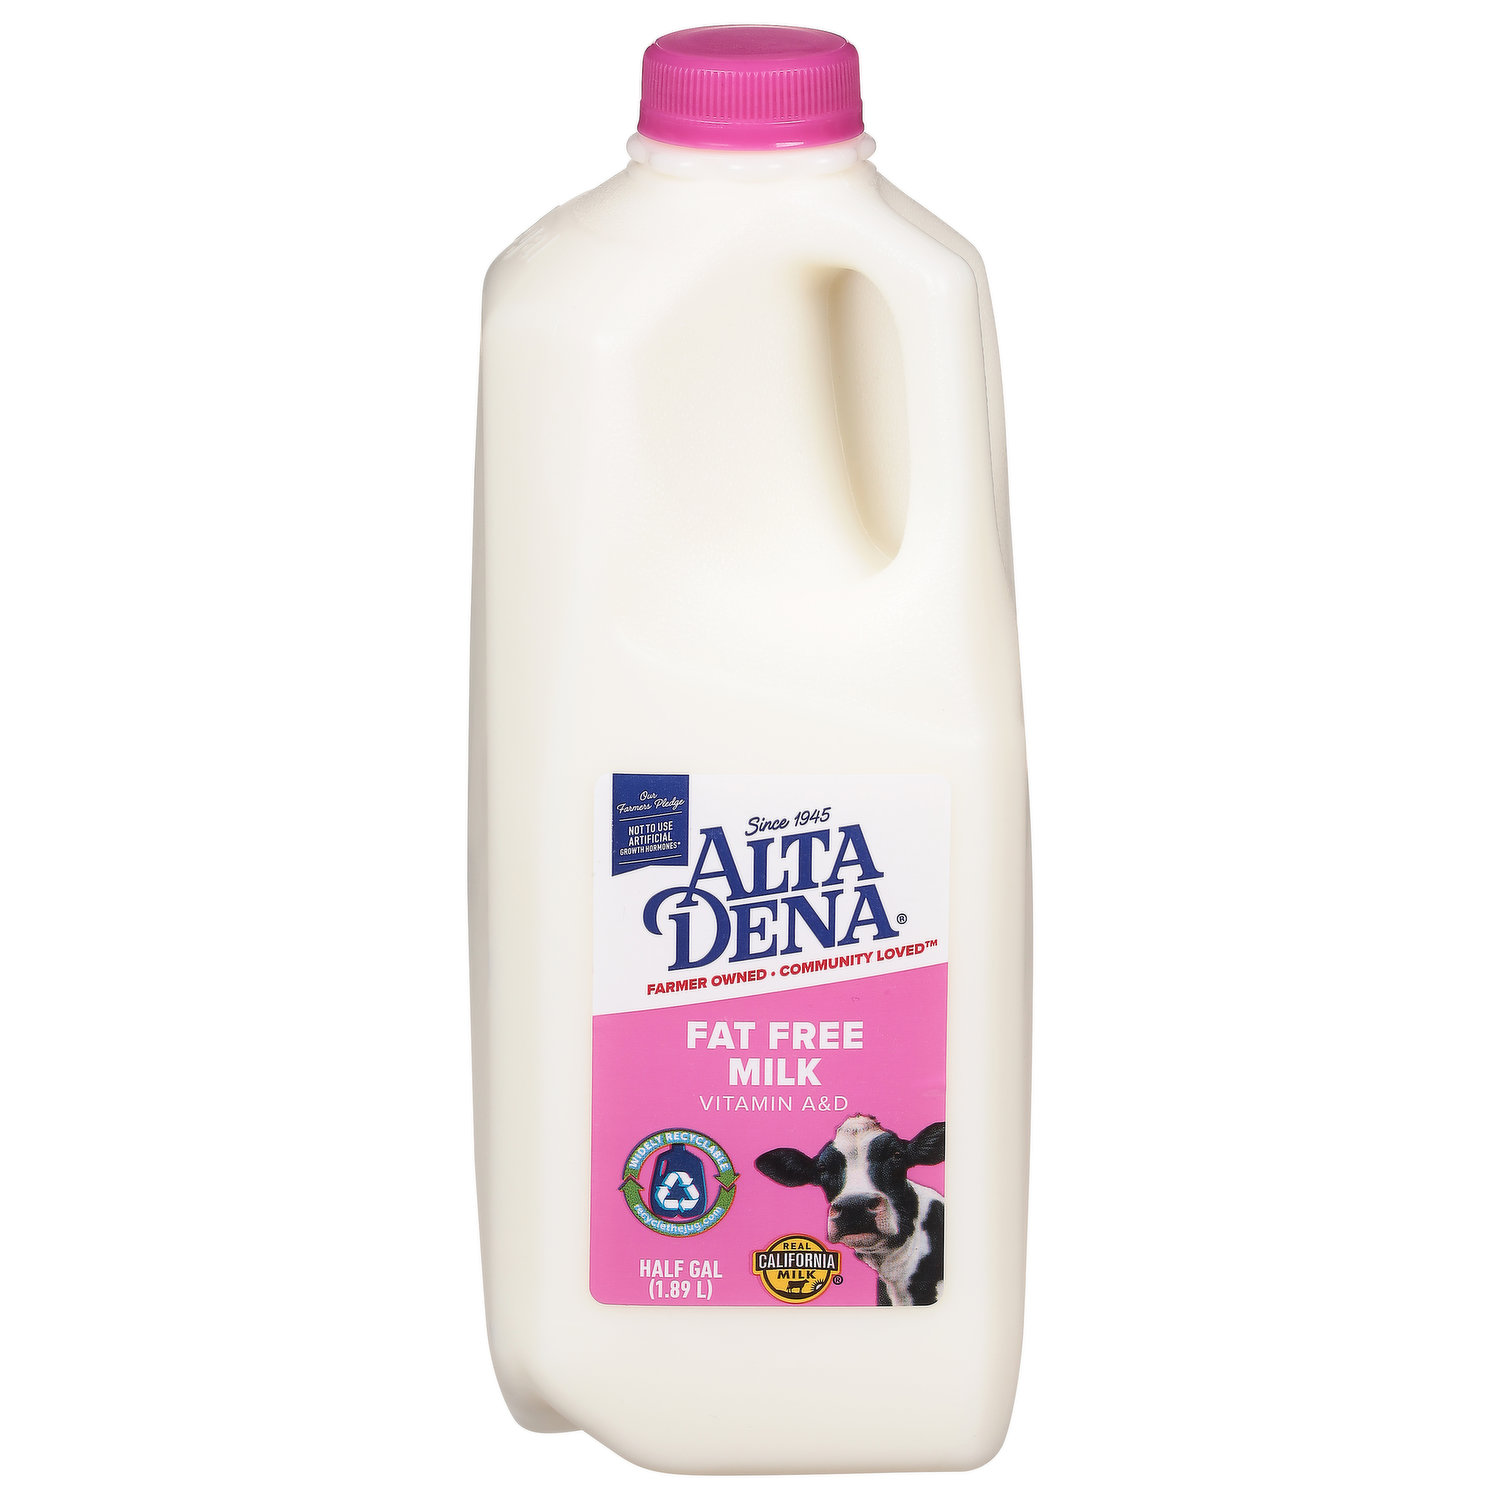 Alta Dena Milk, Fat Free - Smart & Final